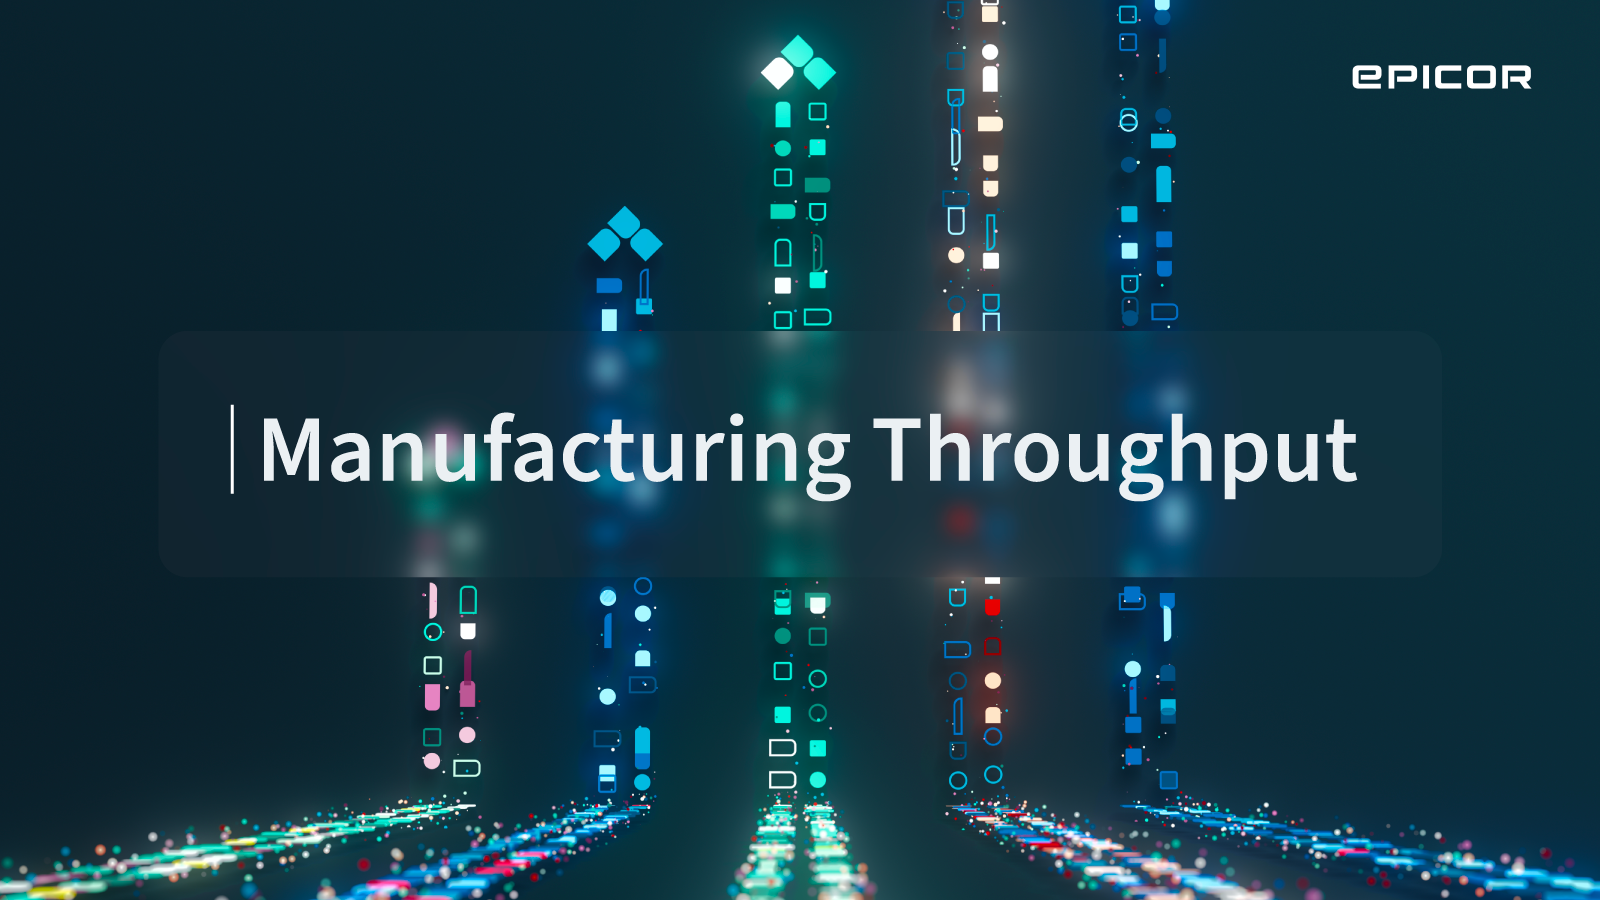 Manufacturing Throughput - Epicor 